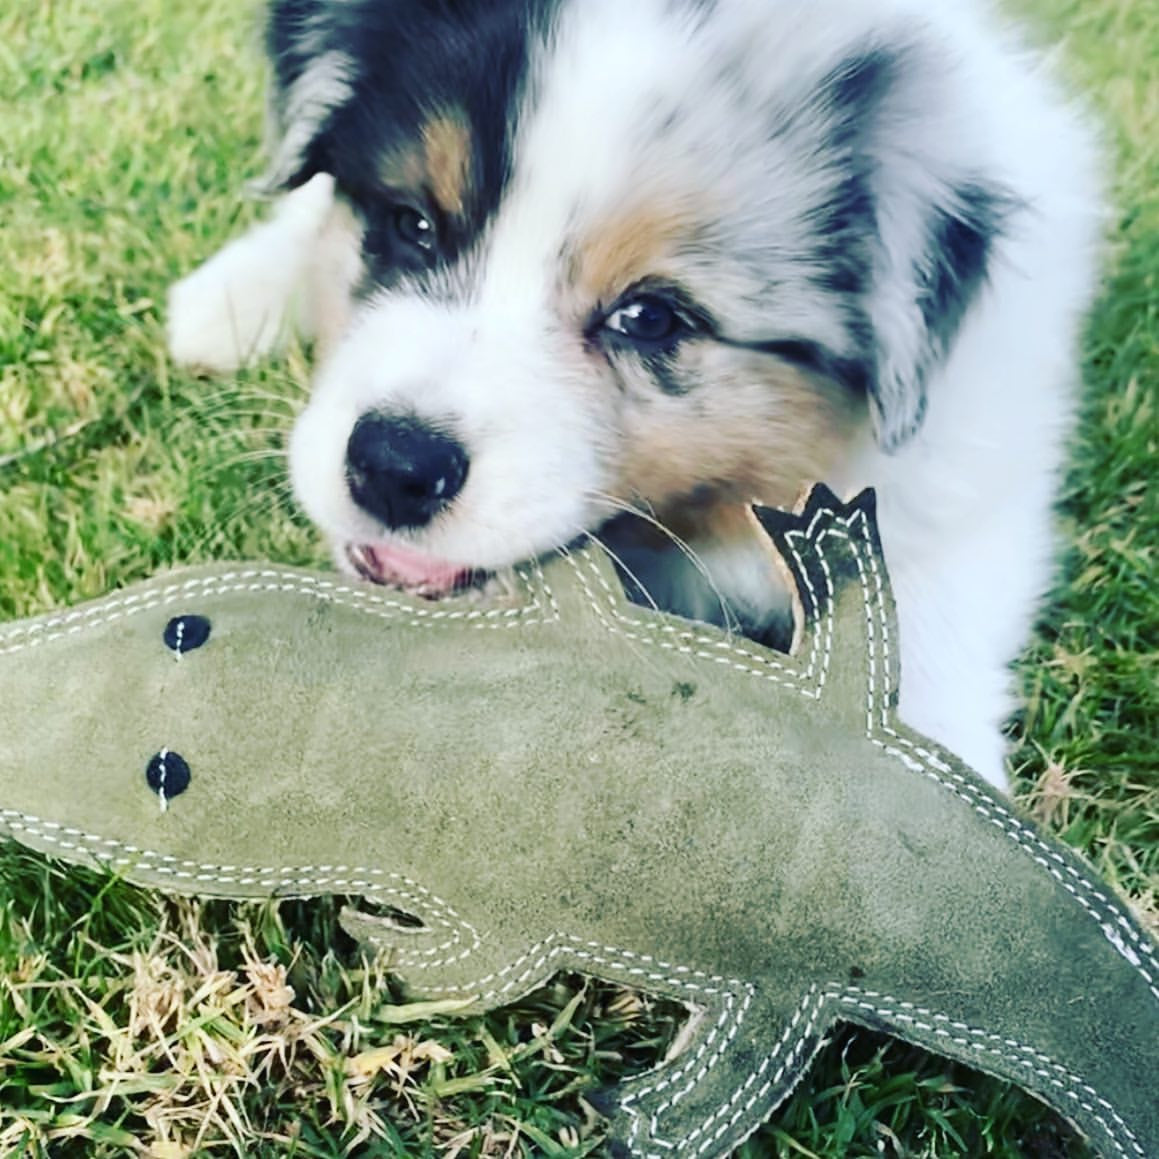 Outback Animal Toy - Steve the Crocodile